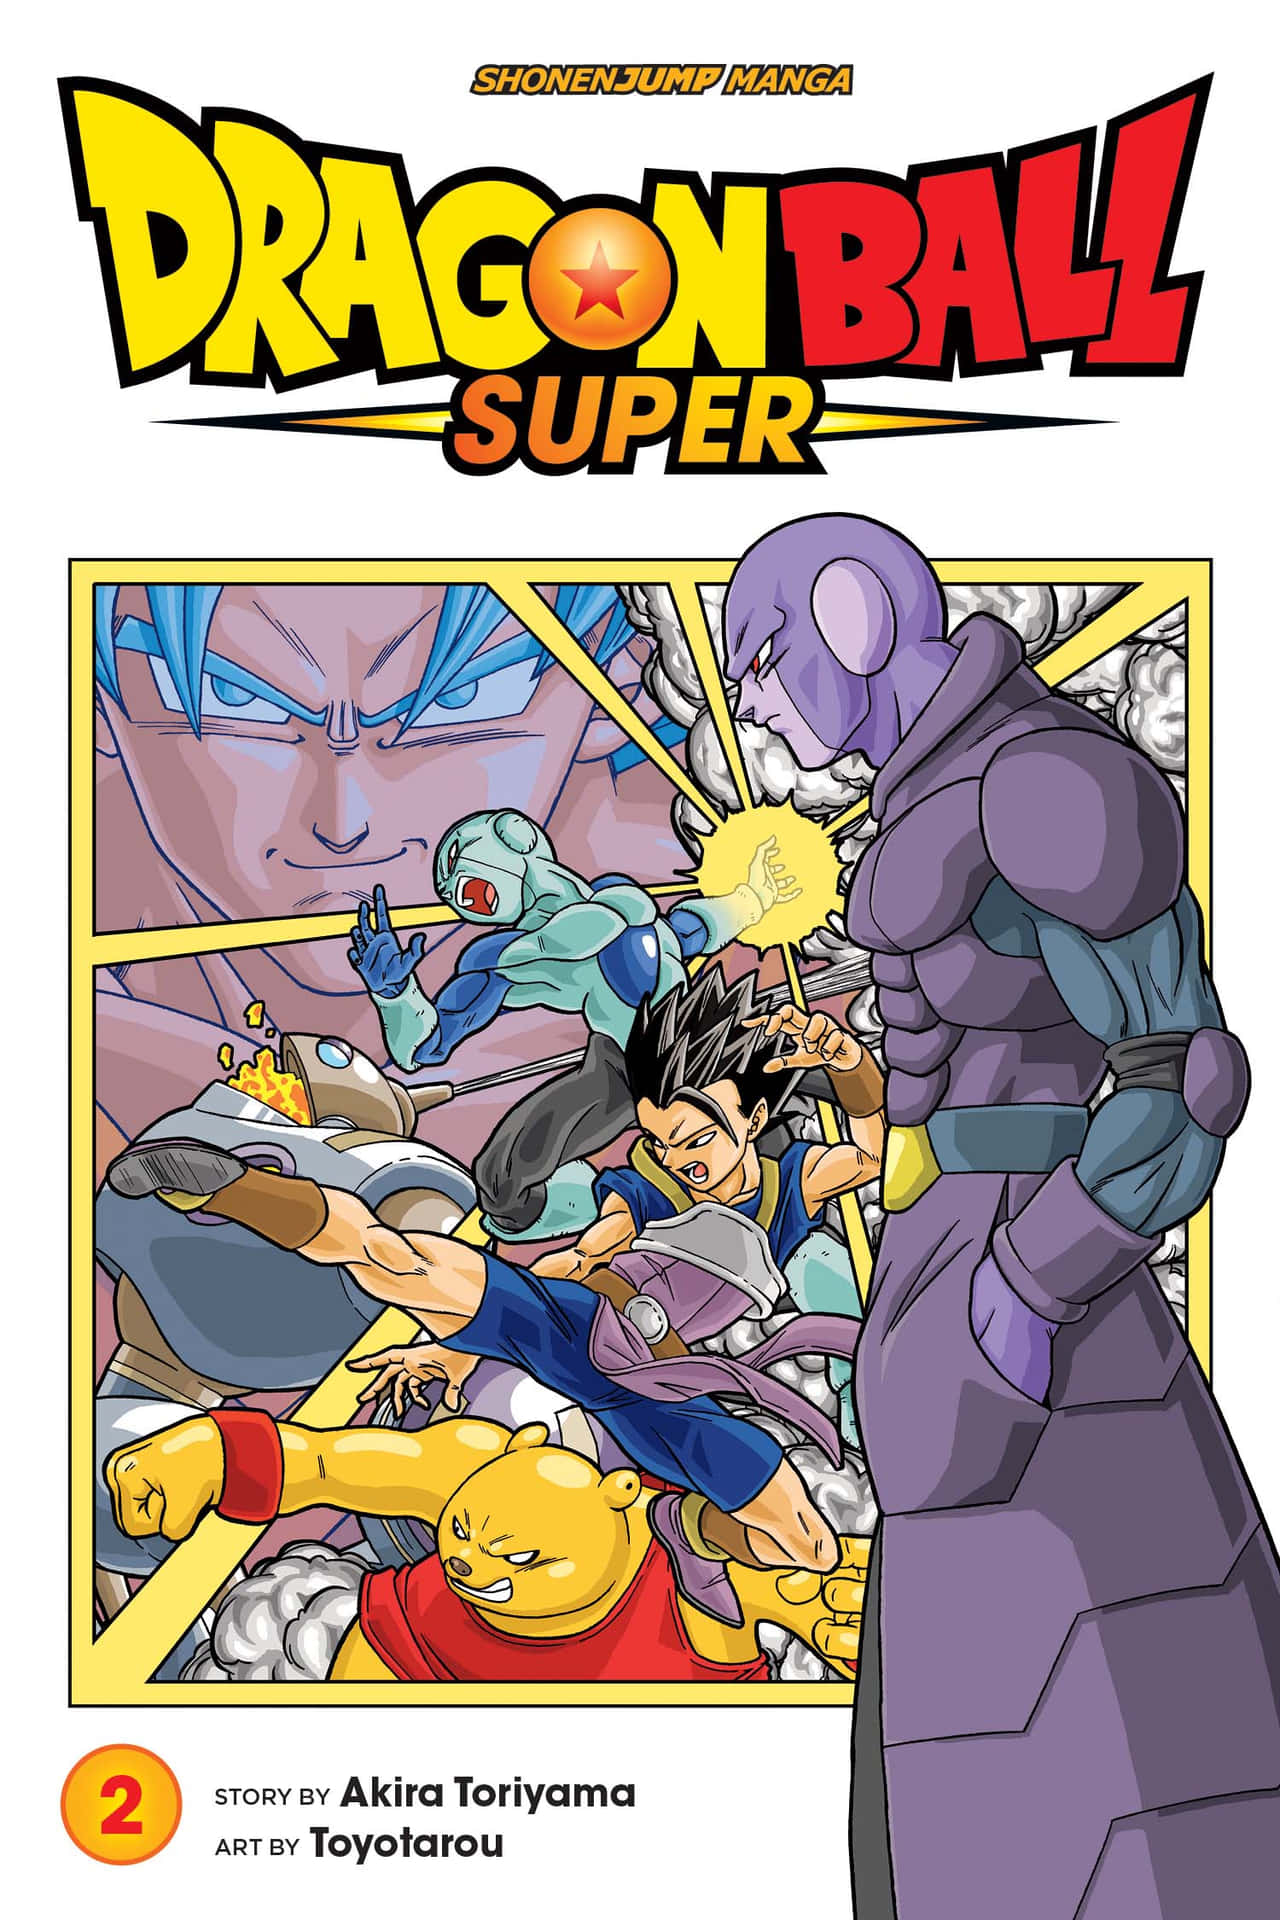 Super Saiyan Blue Gokou on the Cover of the Dragon Ball Super Manga Wallpaper